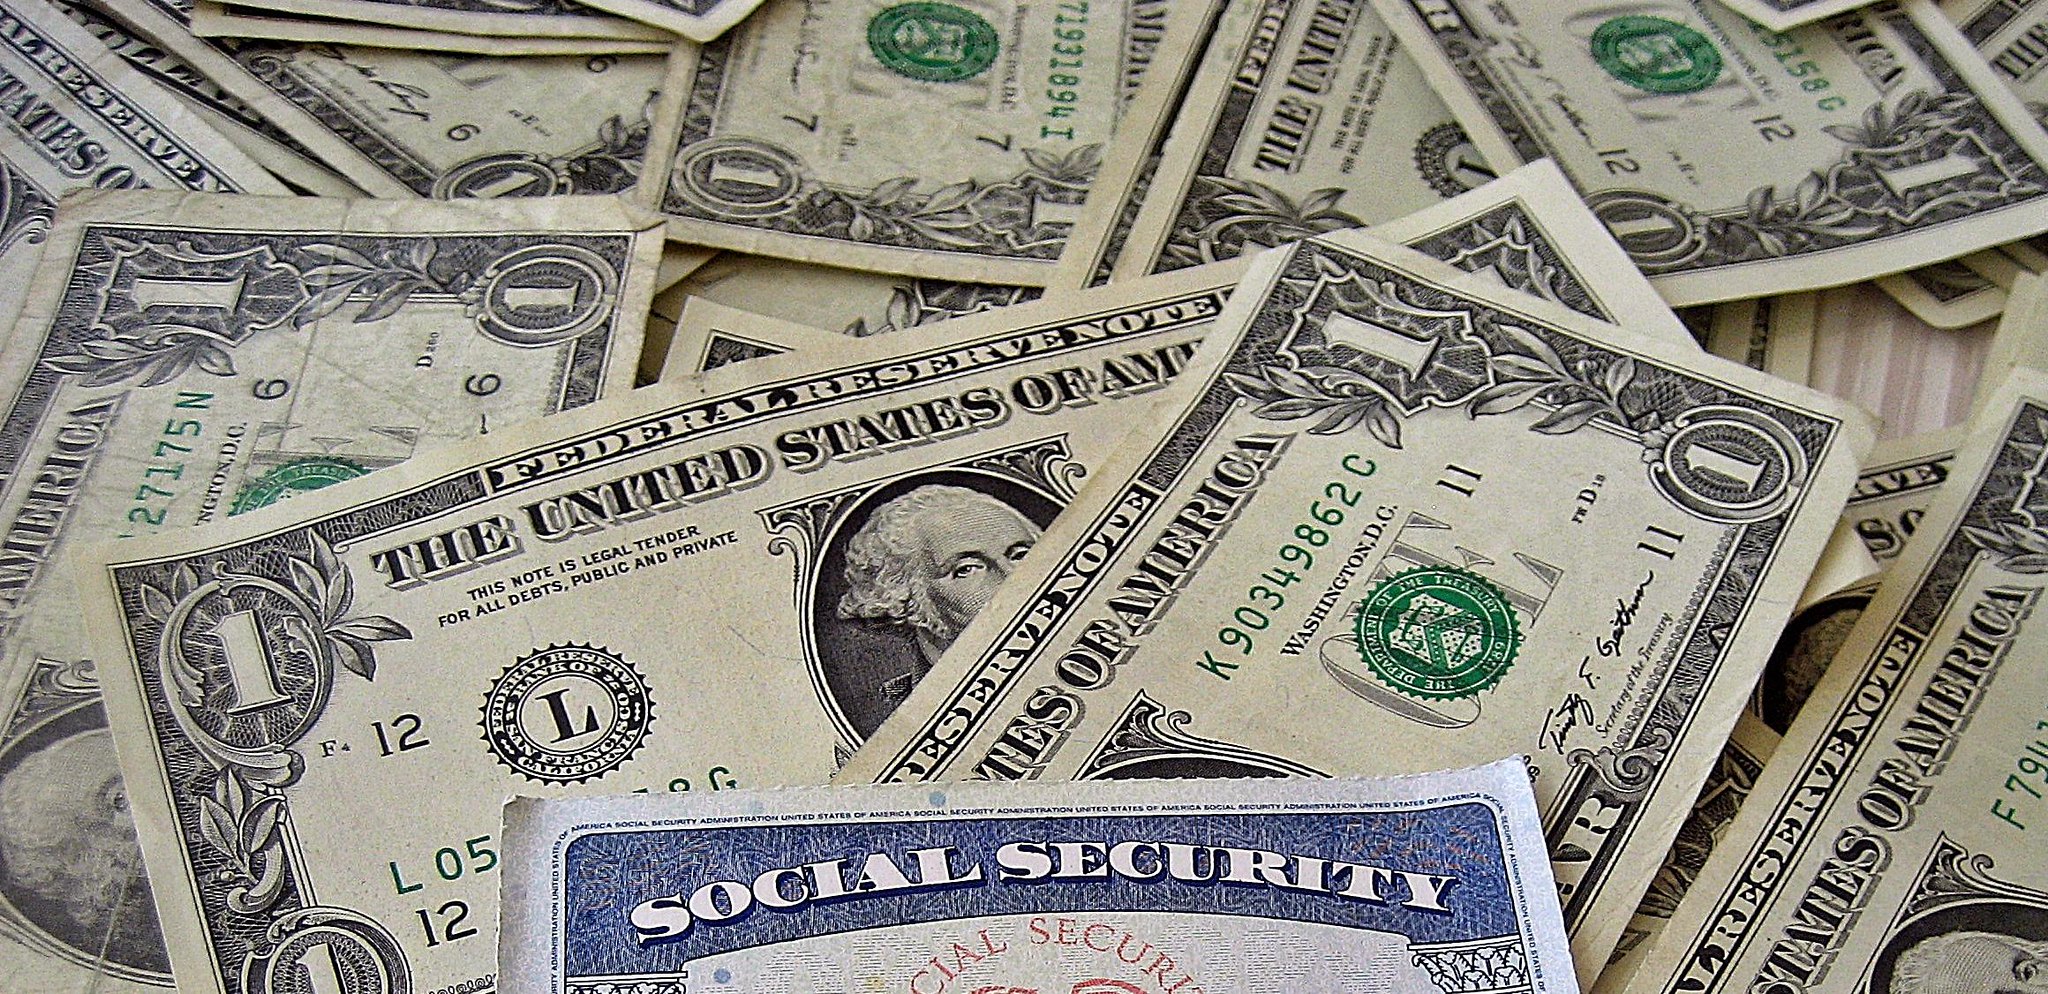 Piles of dollar bills and a social security card.